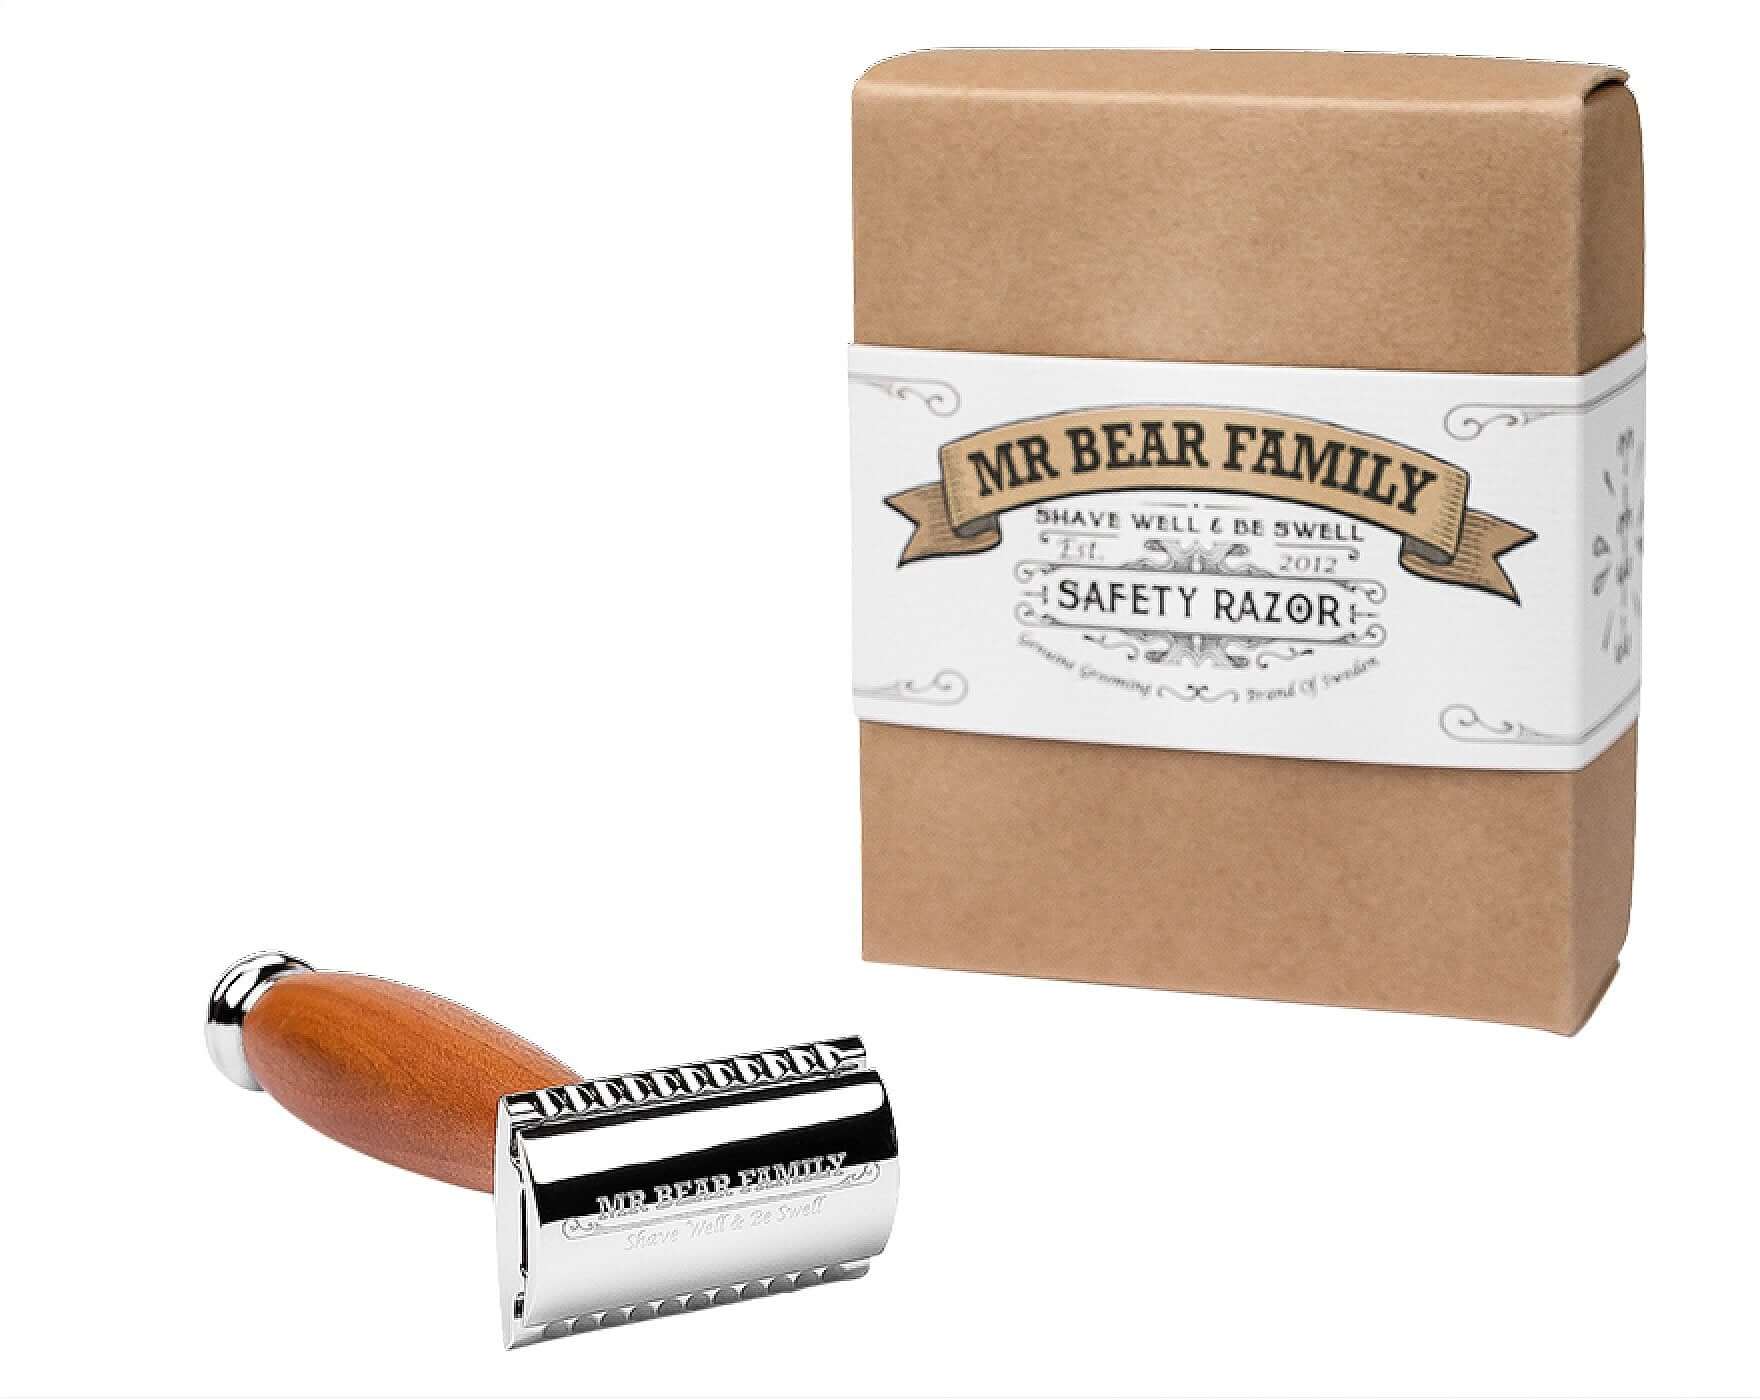 Mr Bear Family Safety Razor - Baard en Co - Safety Razor -